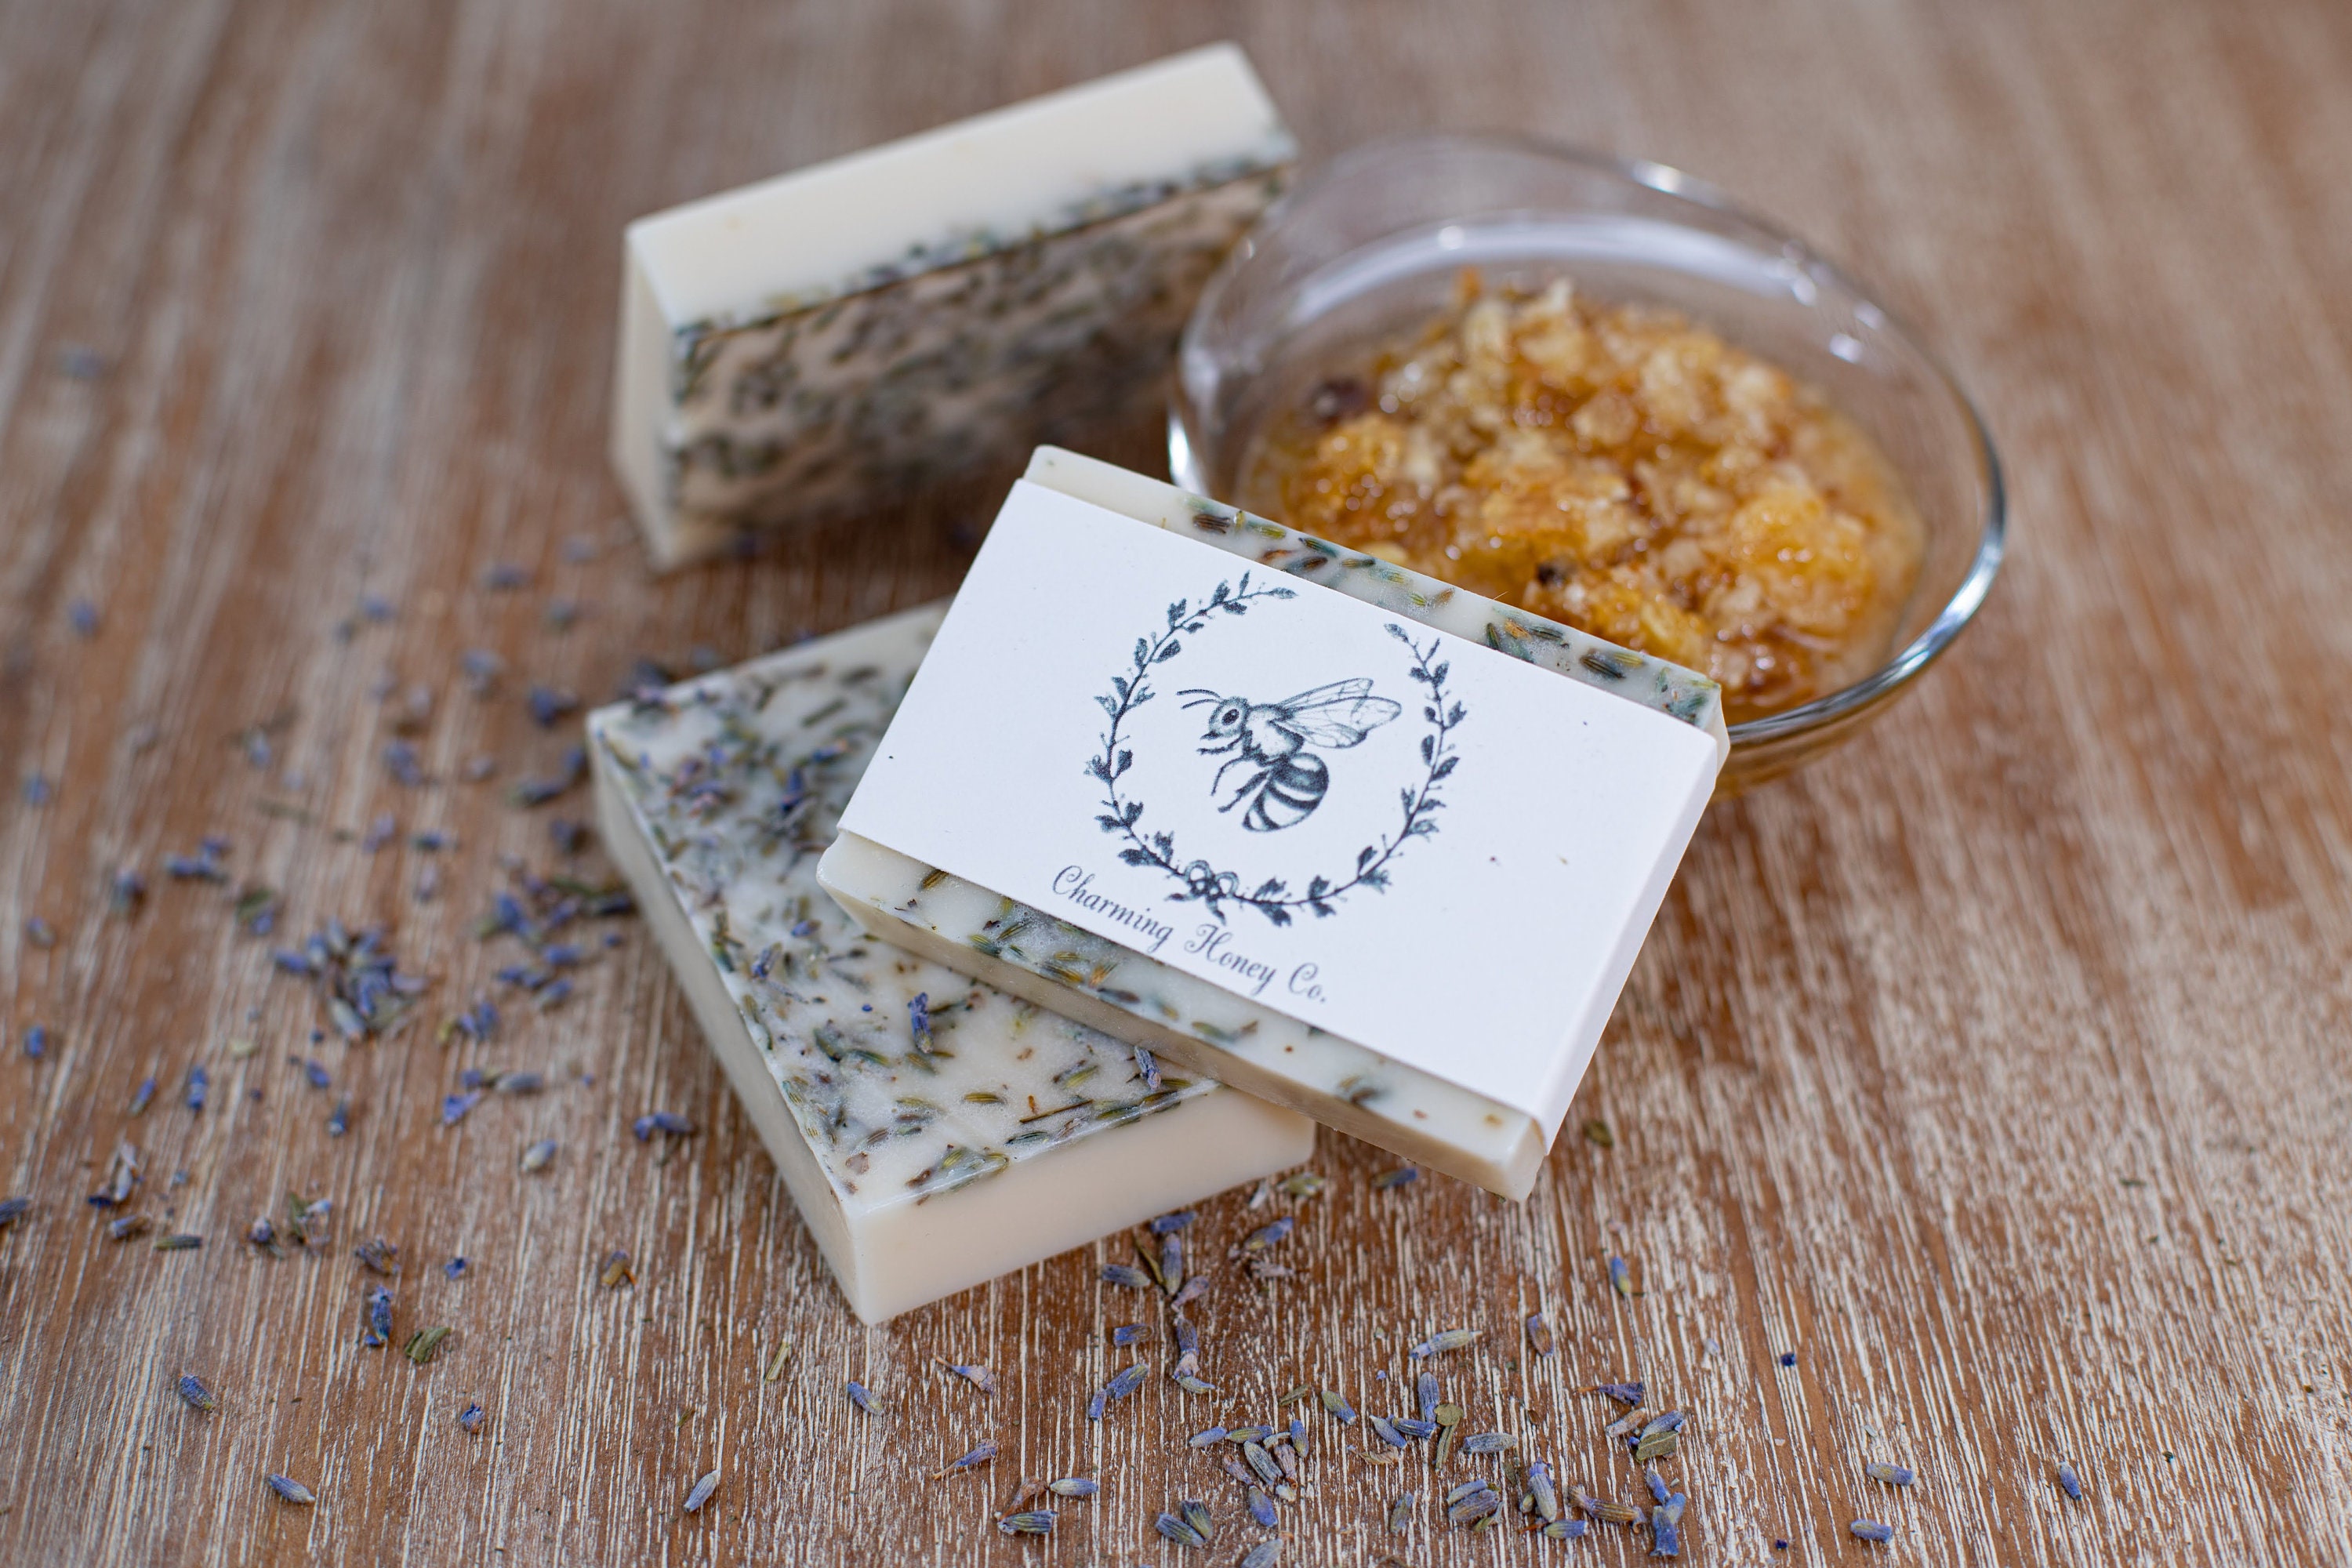 Lavender + Honey Nourishing Soap Bar – Wicked Soaps Co.